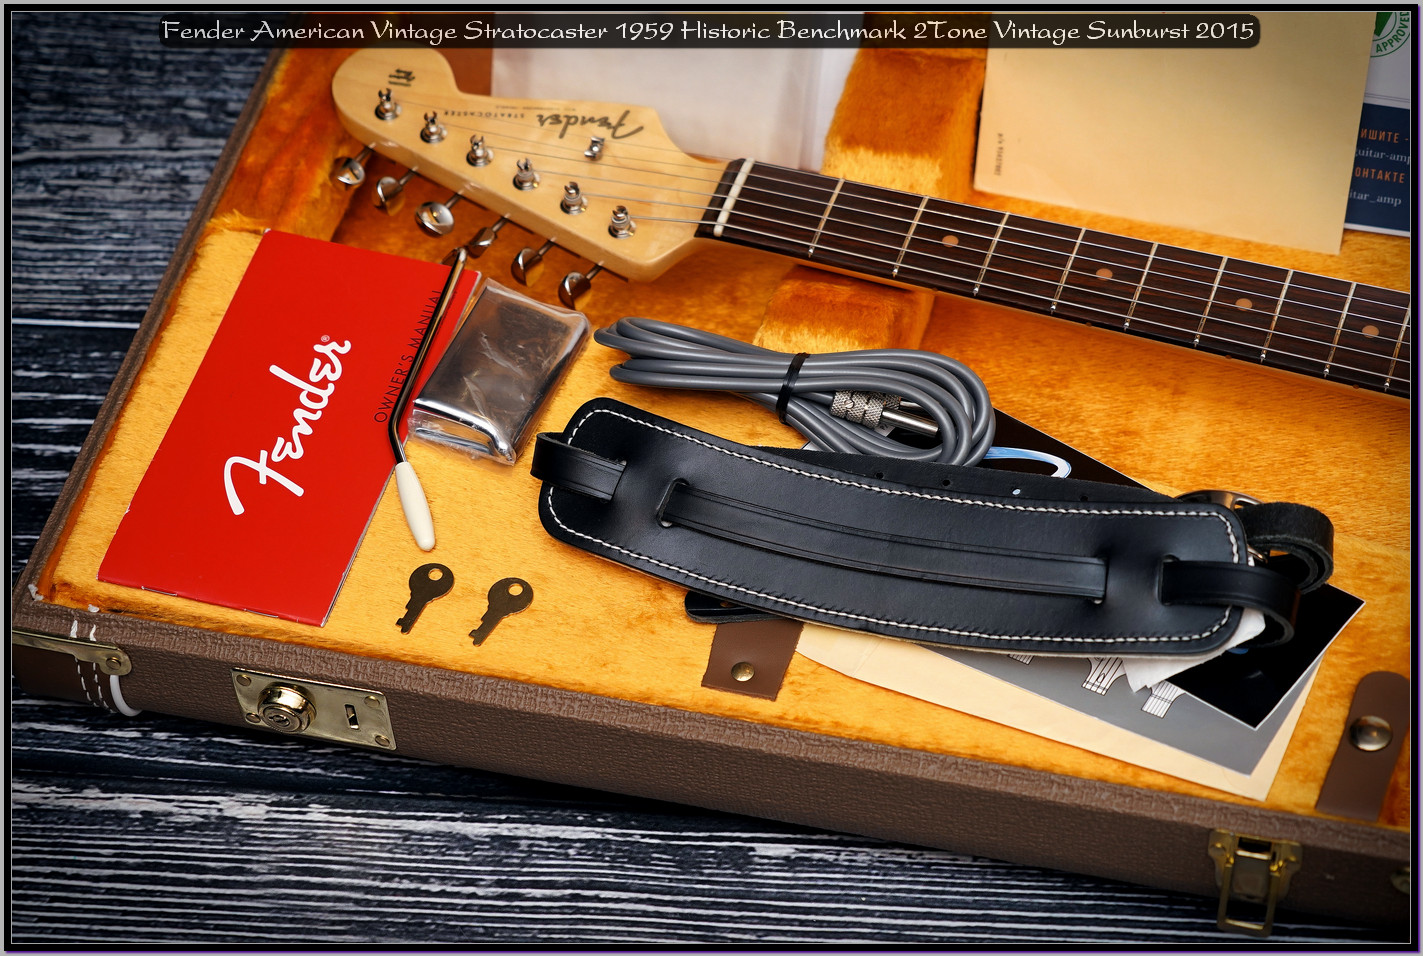 Fender American Vintage Stratocaster 1959 Historic Benchmark 2Tone Vintage Sunburst 2015 13_x1400.jpg